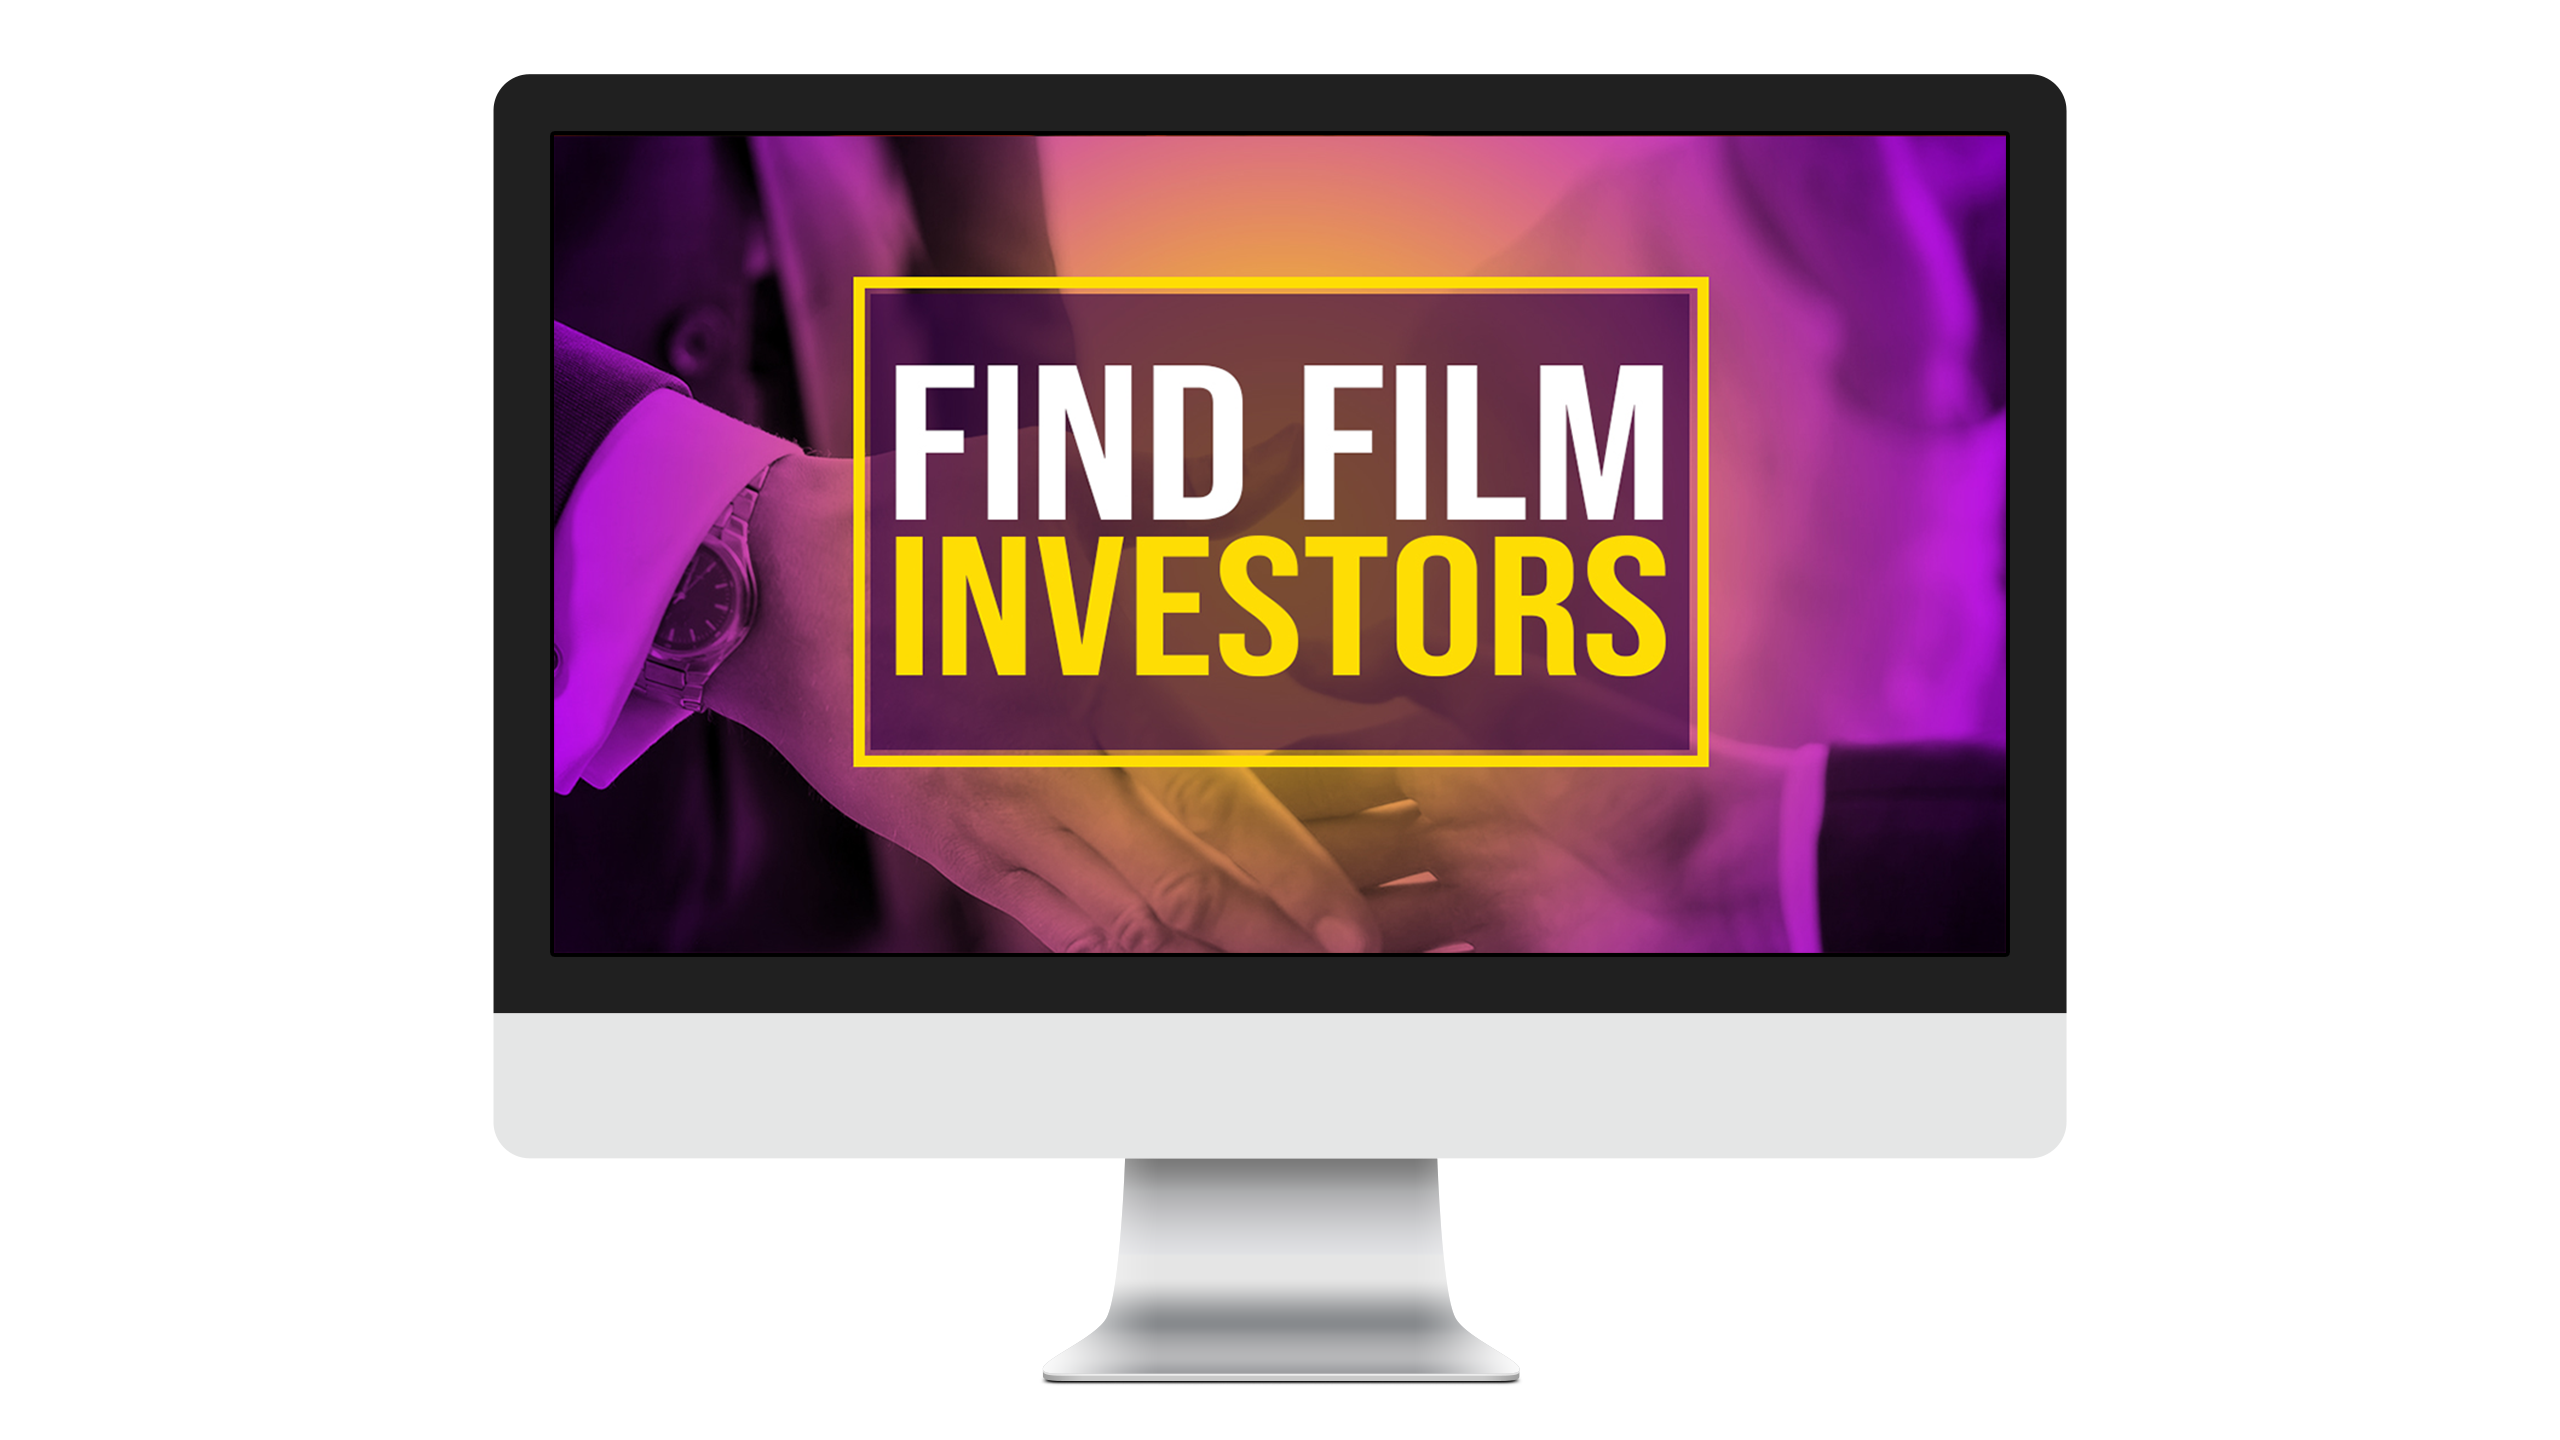 Find Film Investors Course